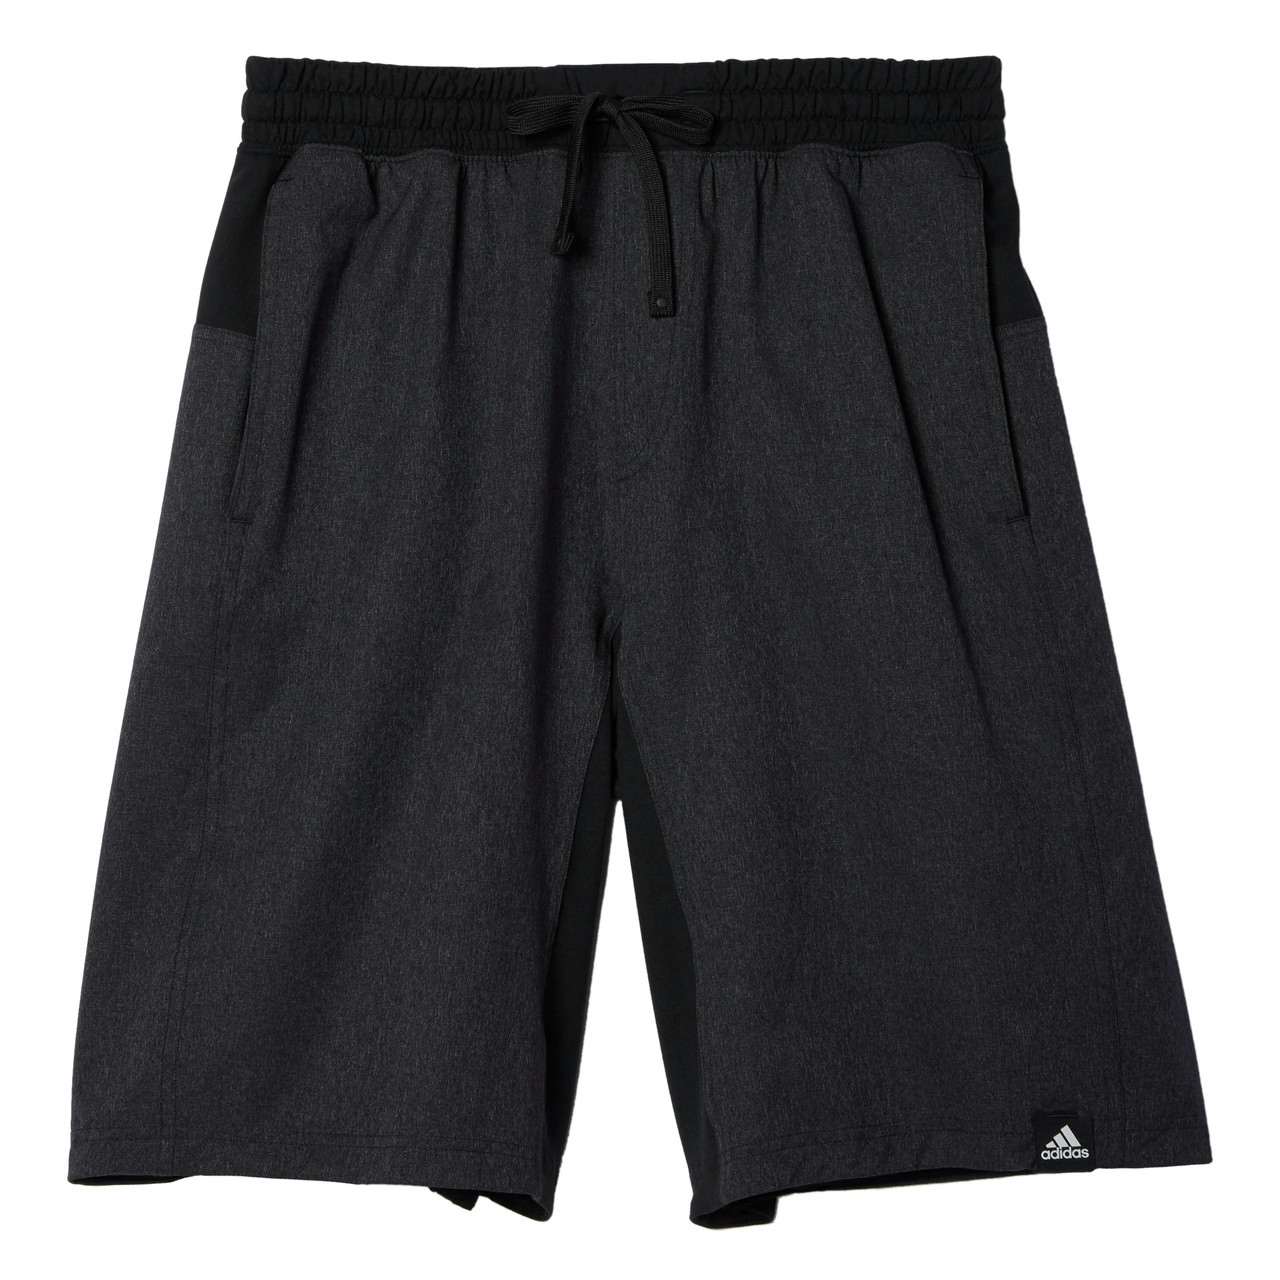 S1 Woven Shorts Black/Grey